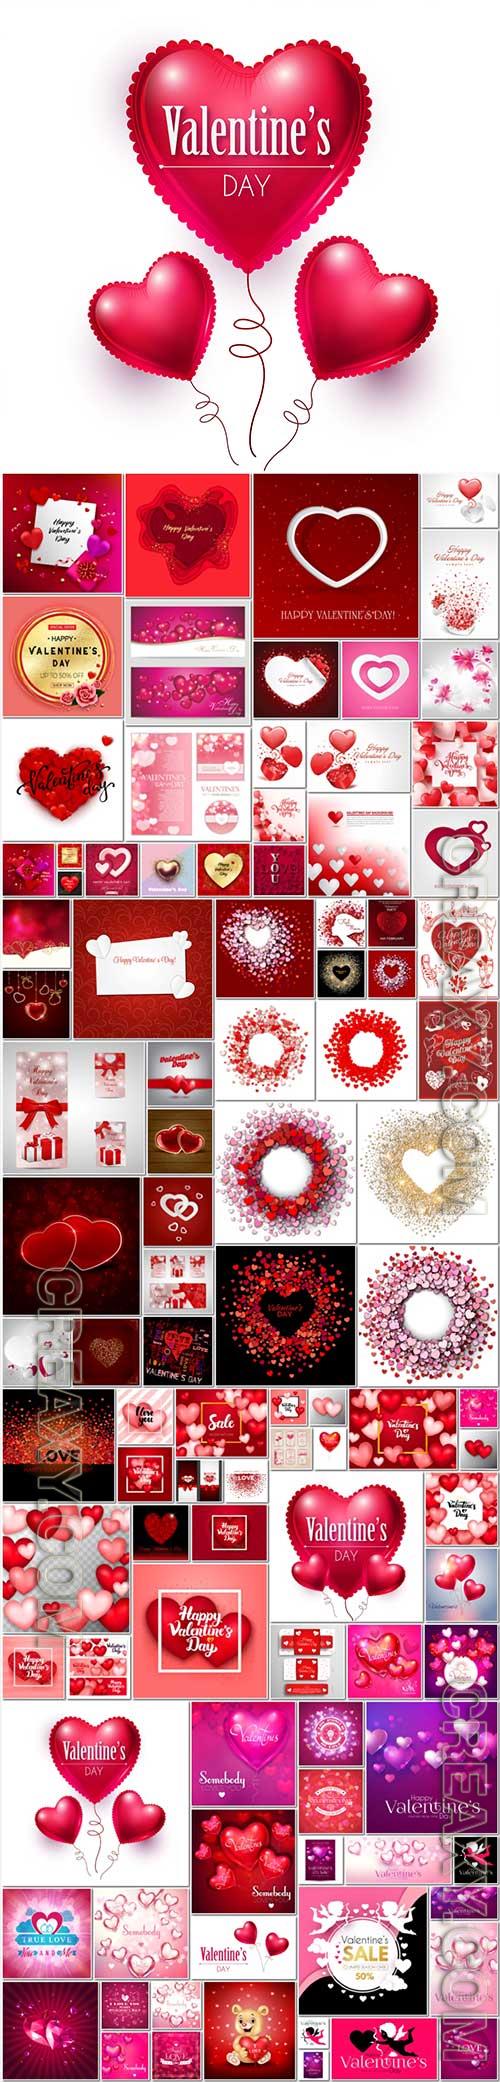 100 Bundle Happy Valentines Day, love, romance, hearts in vector vol 8